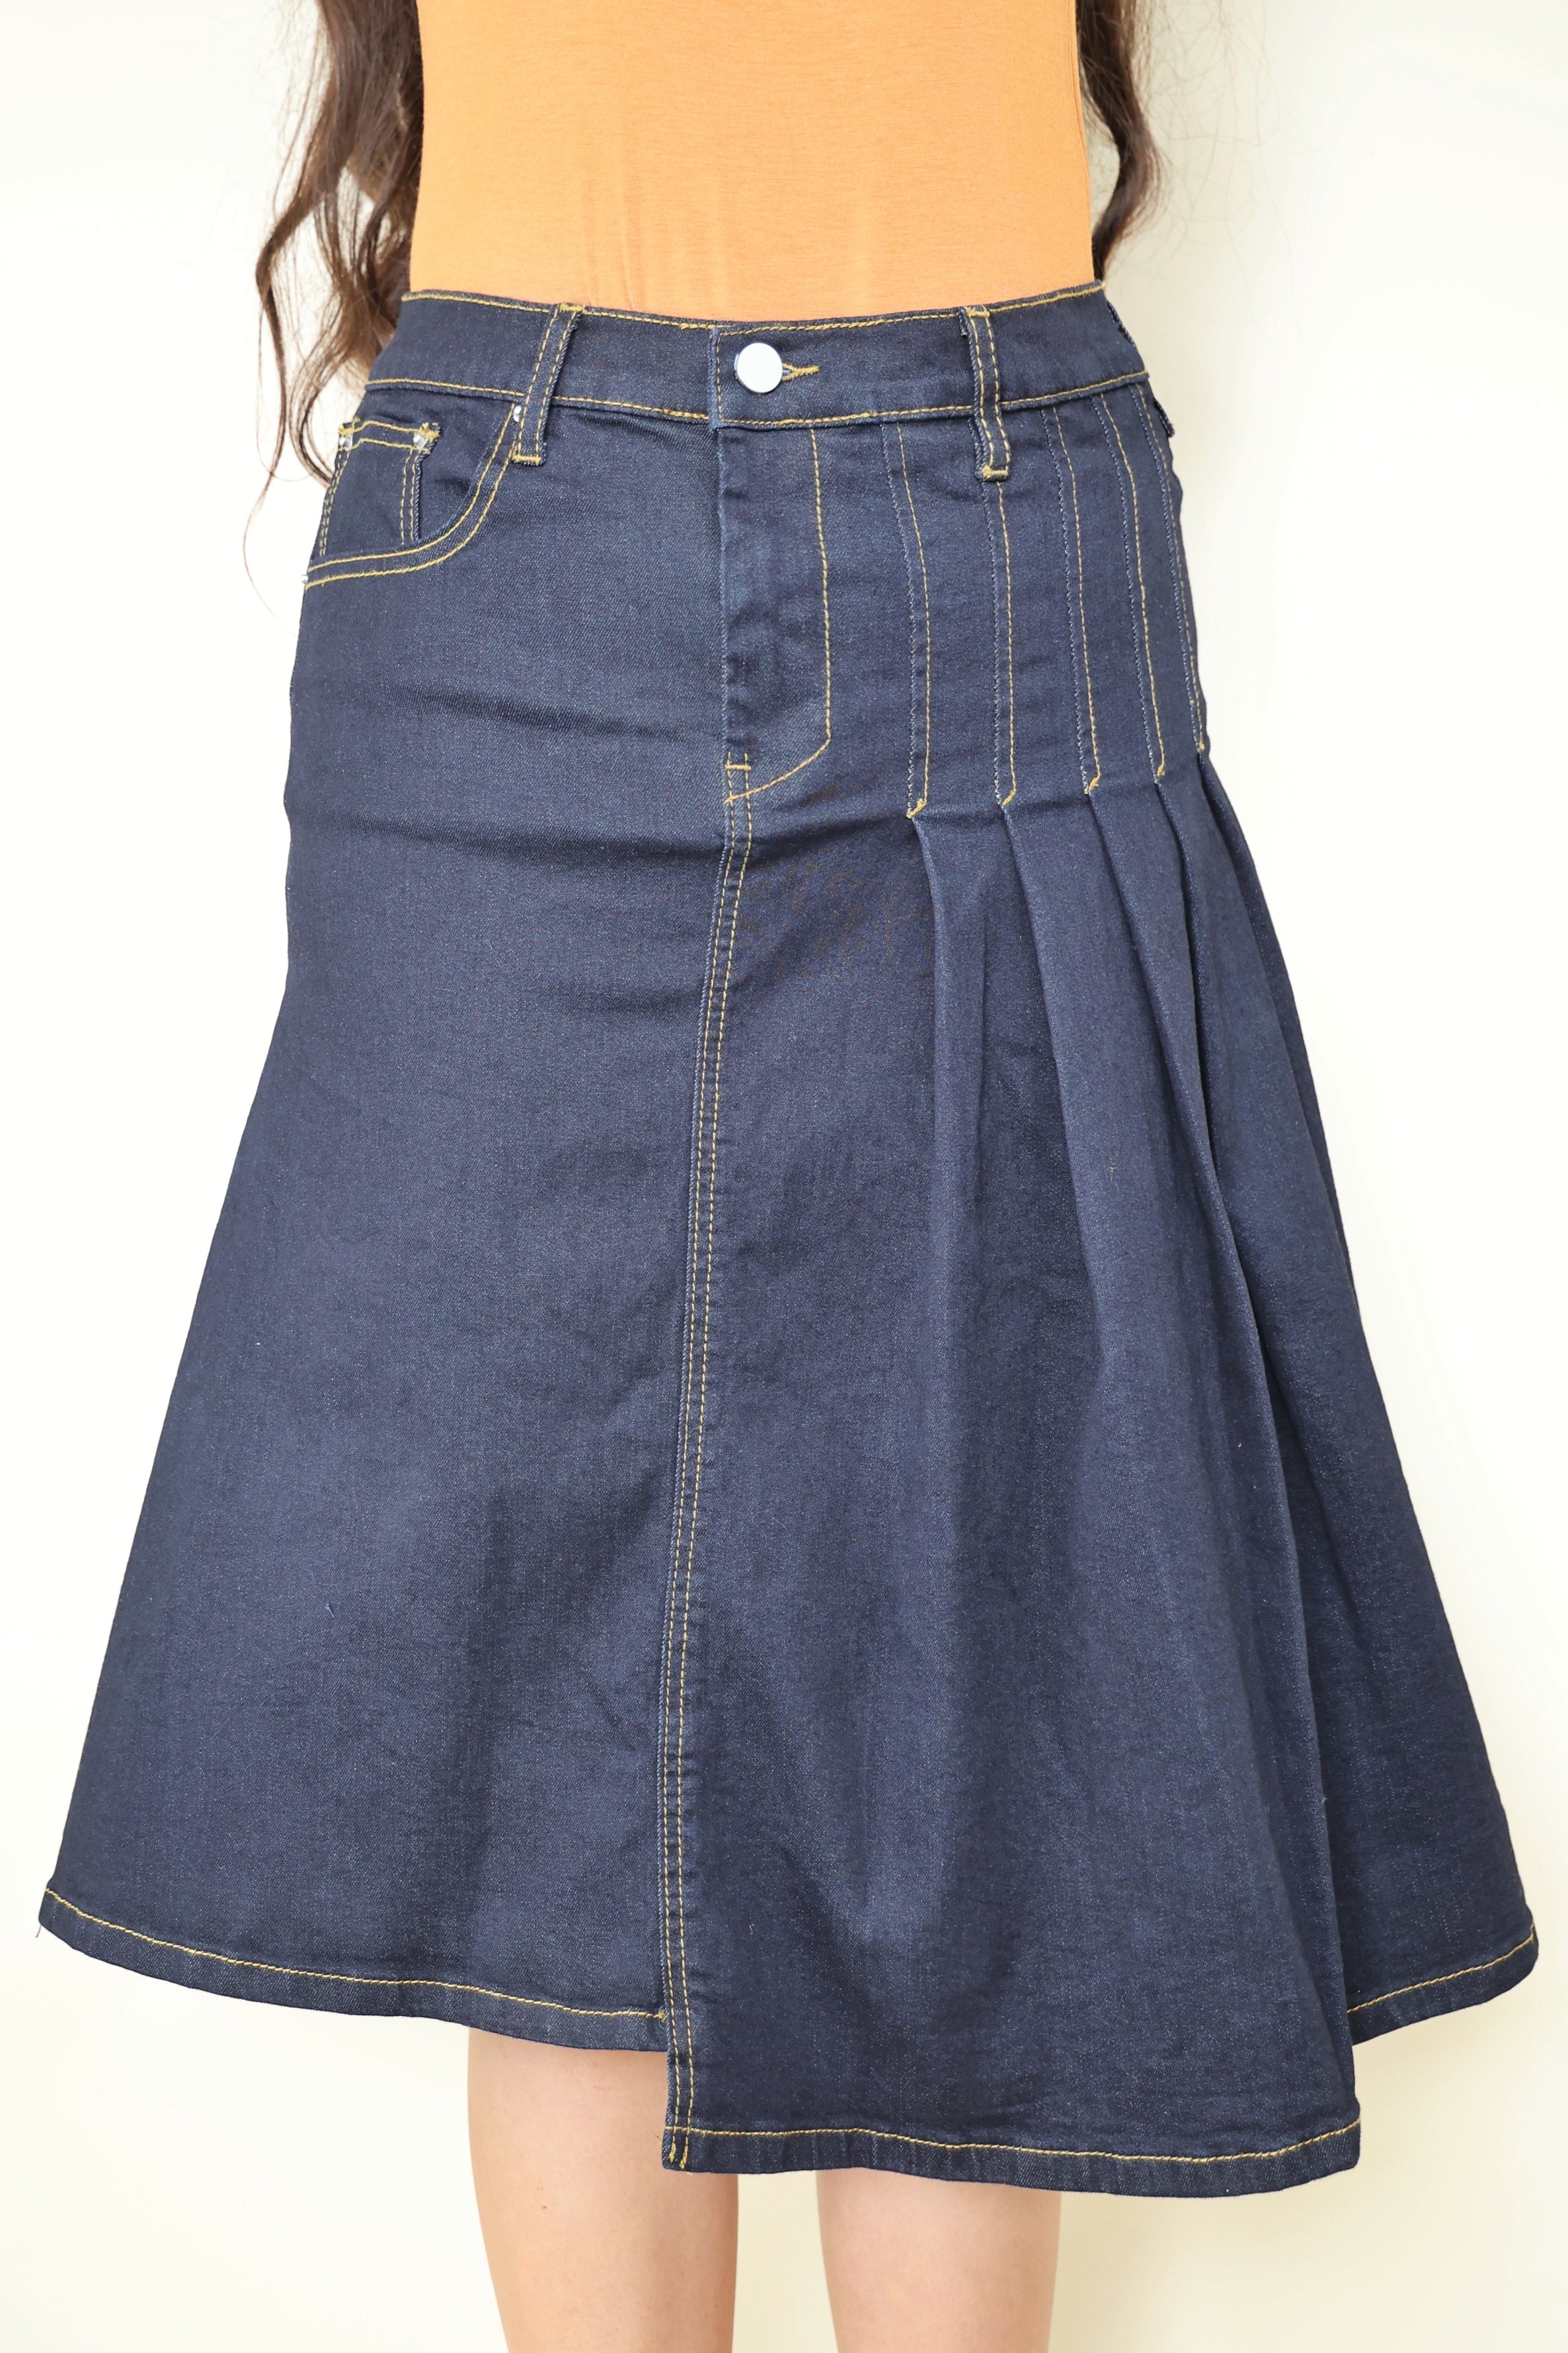 Blue denim skirt women's straight new slit fashion diamond lattice